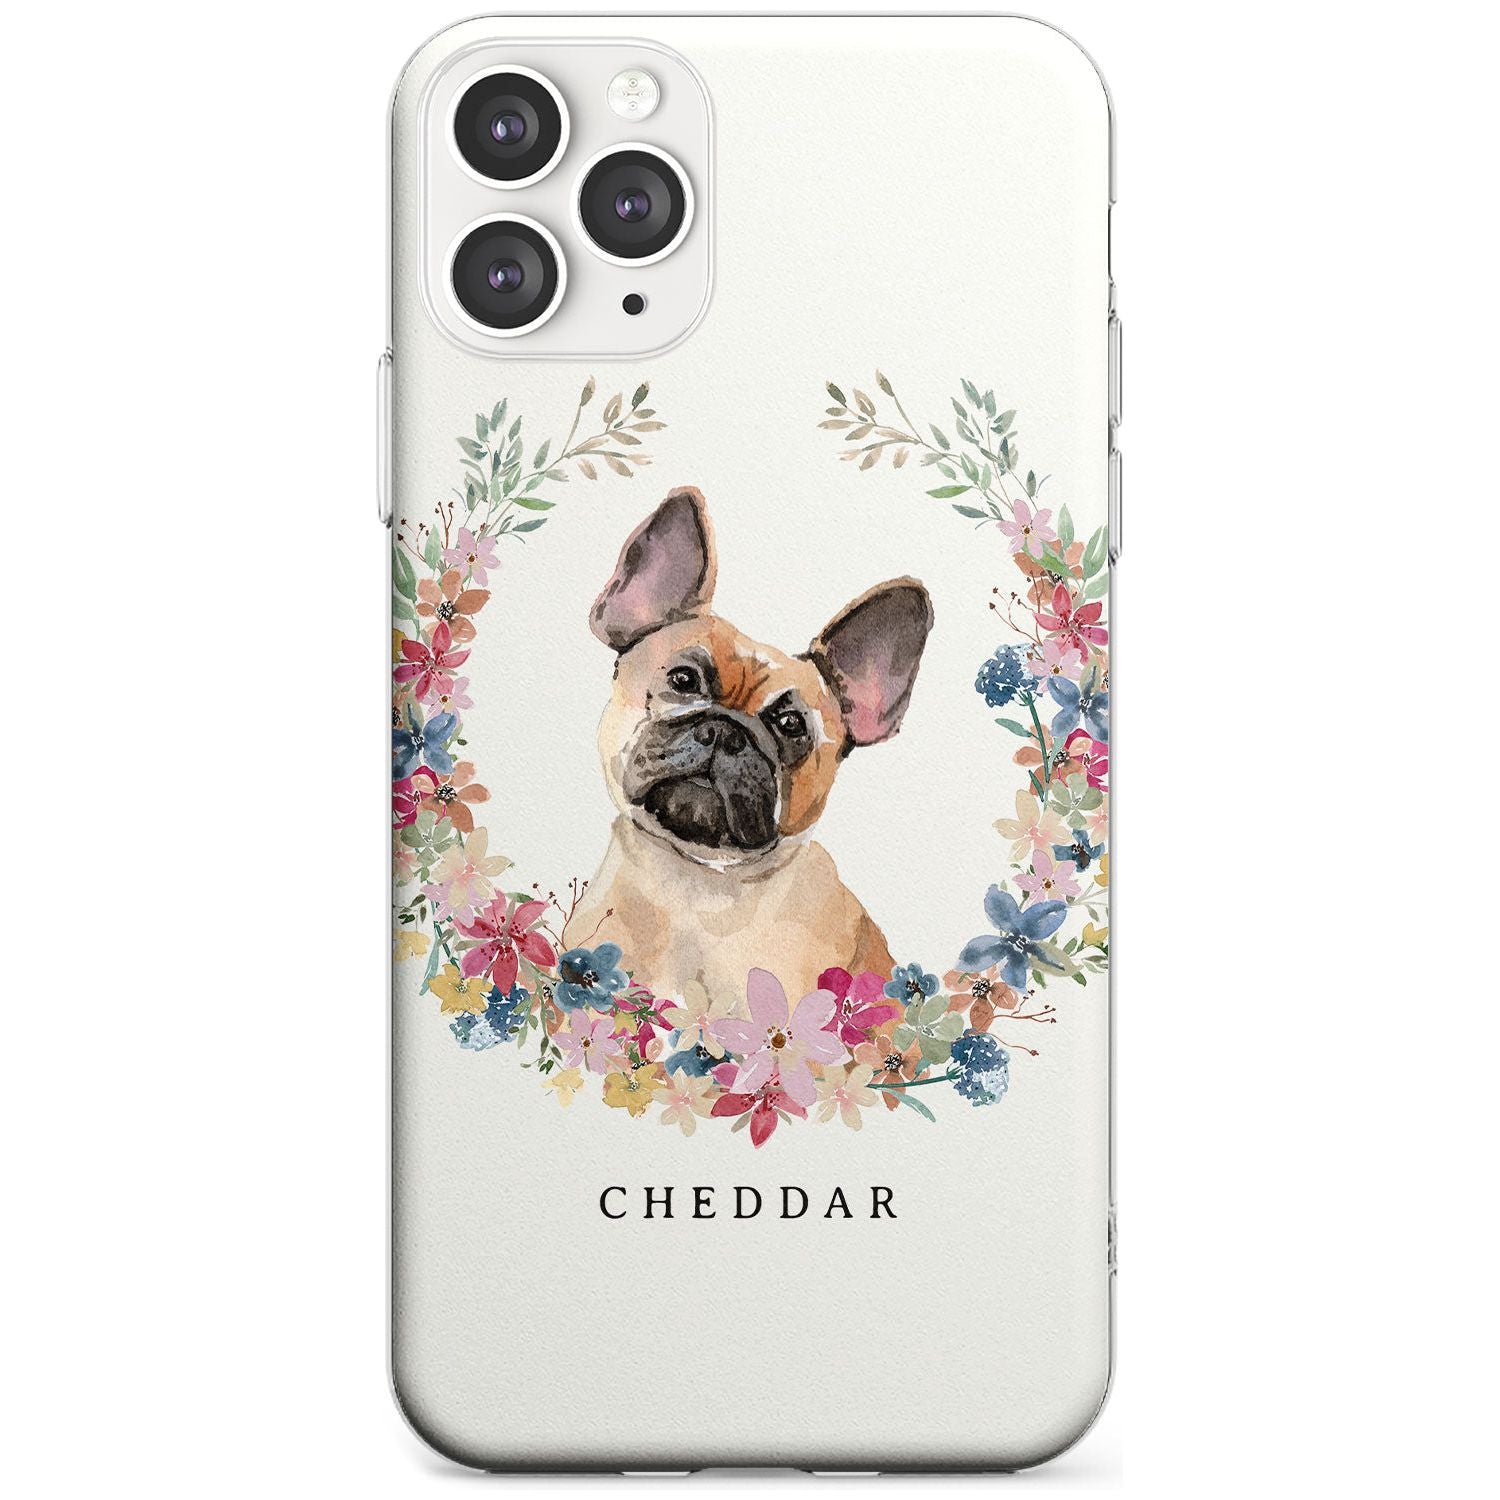 Tan French Bulldog Watercolour Dog Portrait Slim TPU Phone Case for iPhone 11 Pro Max